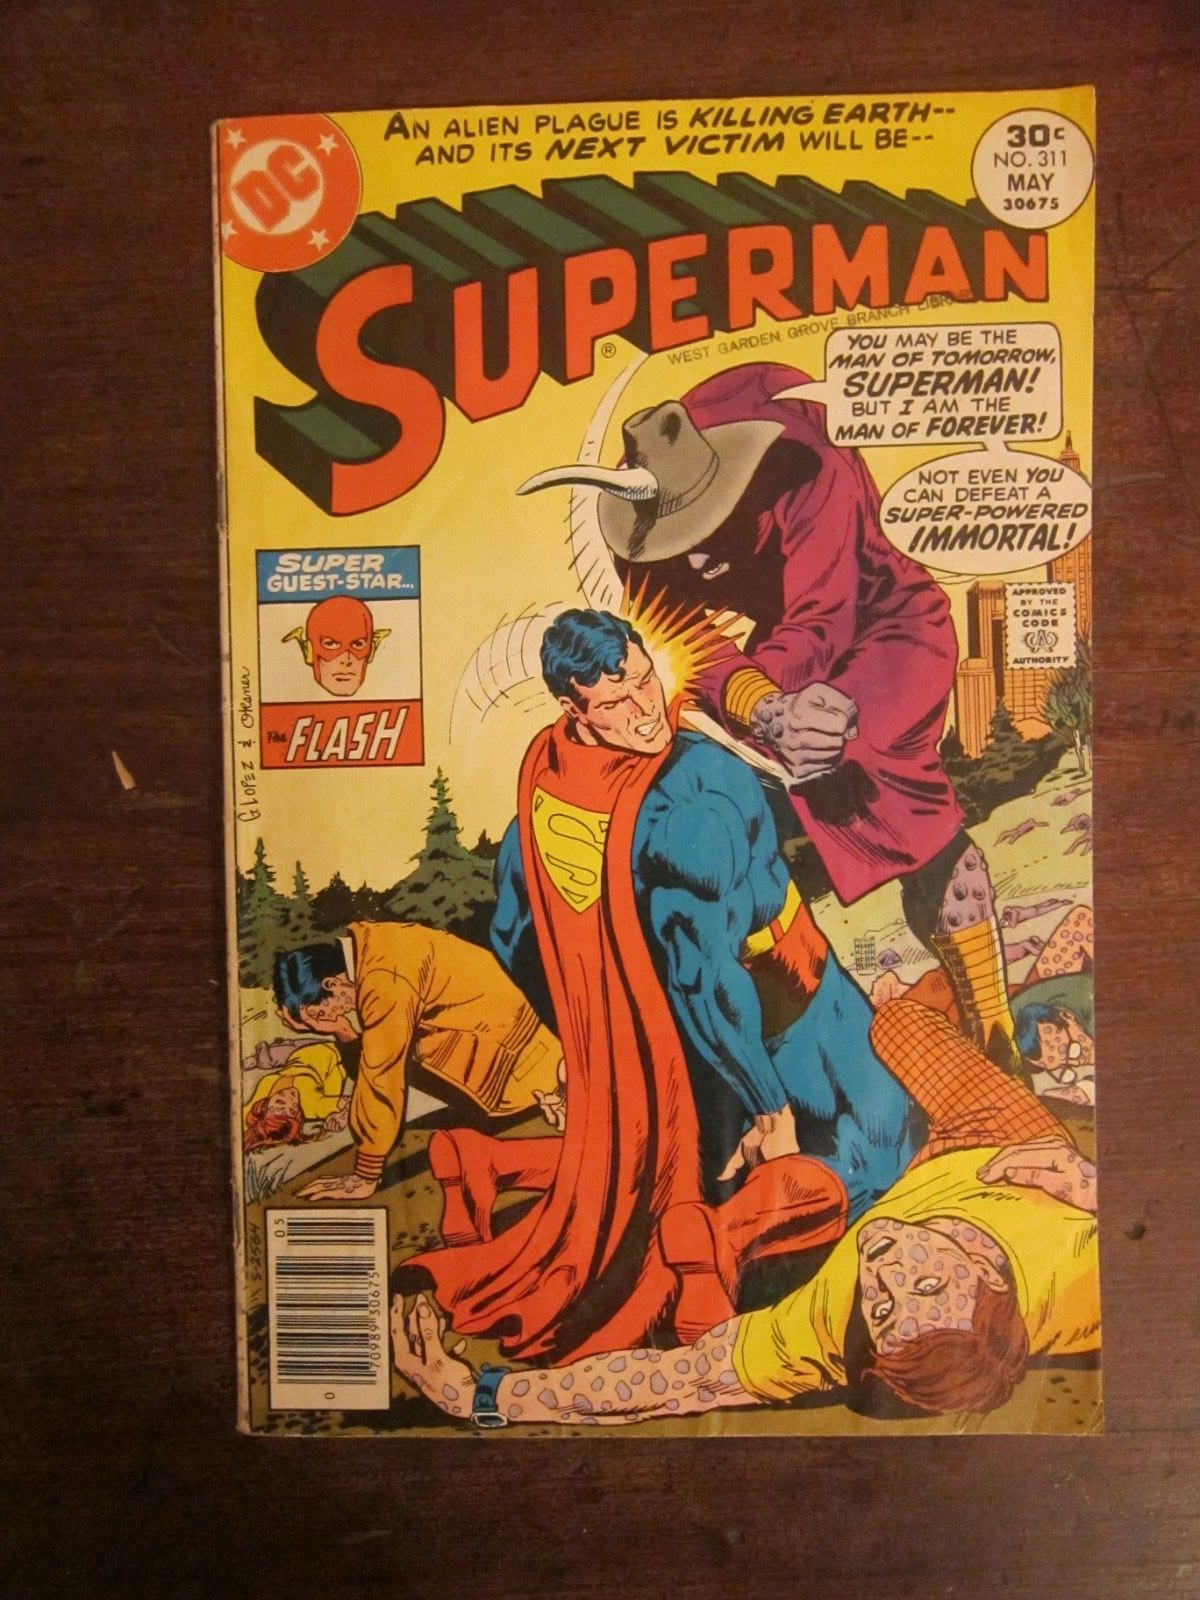 Superman #311 - Curt Swan, Frank Springer - Nam-Ek, Antibiotic Man - Bronze Age